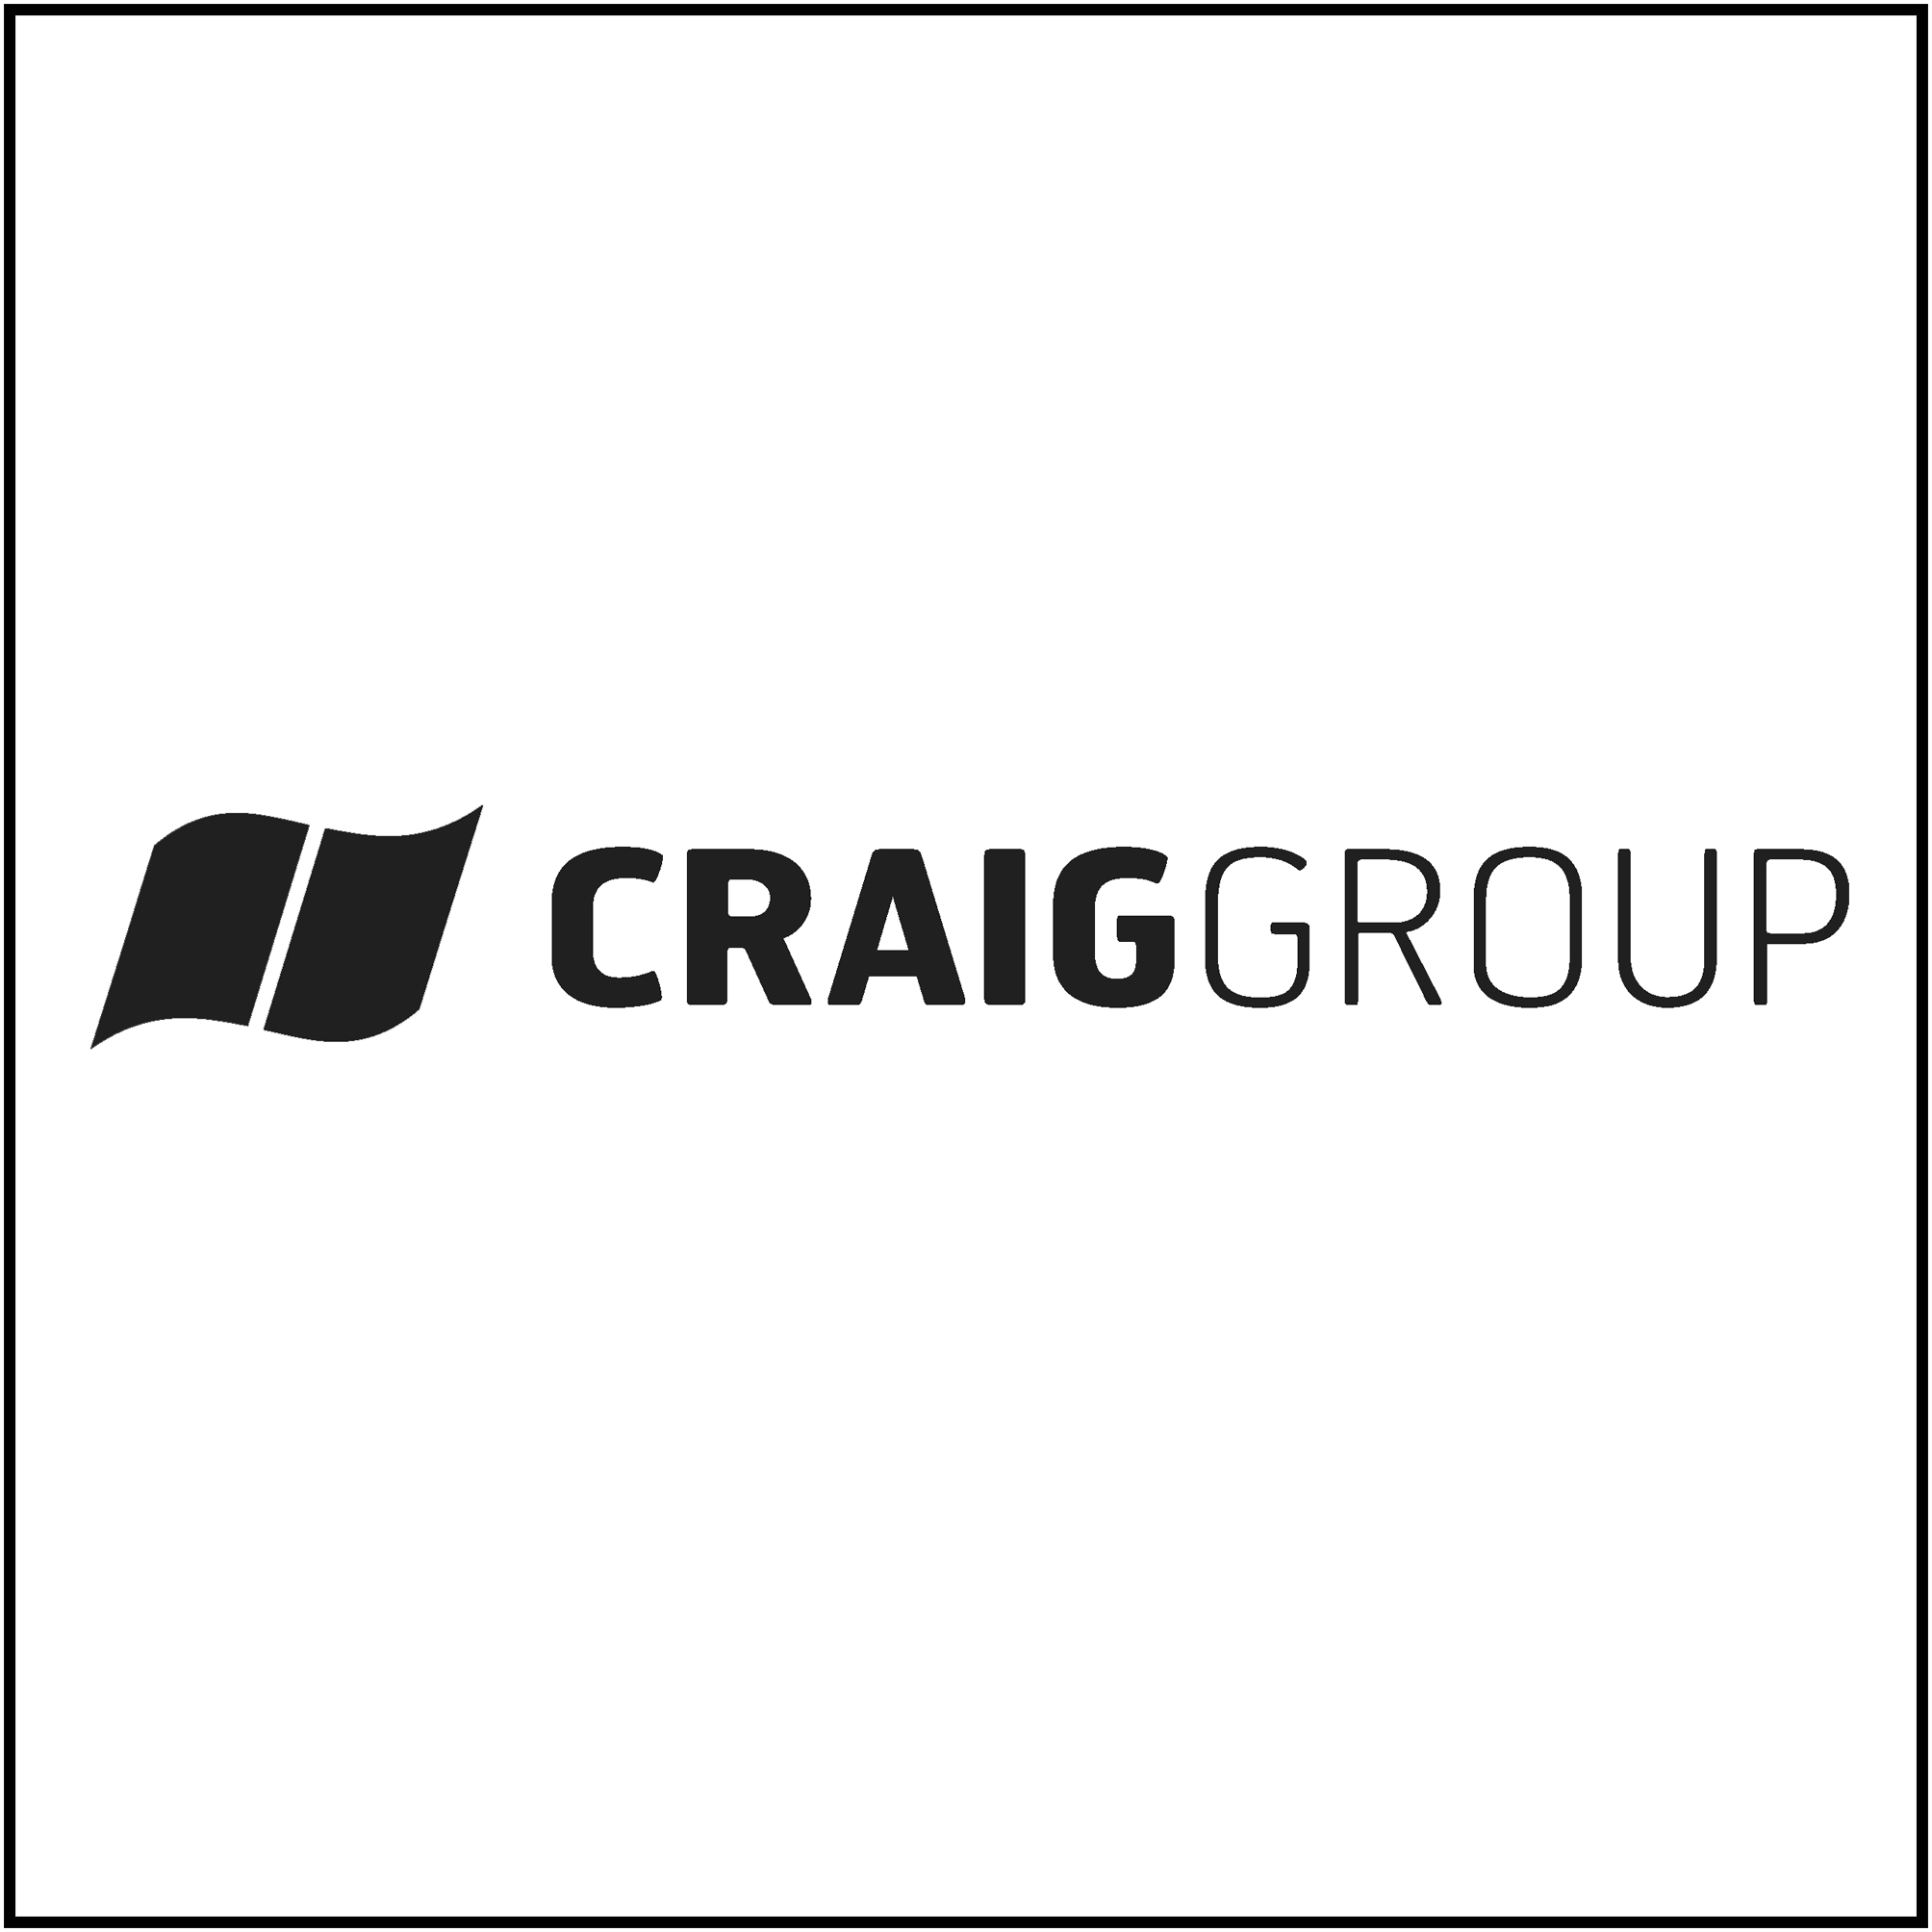 Craig Group logo